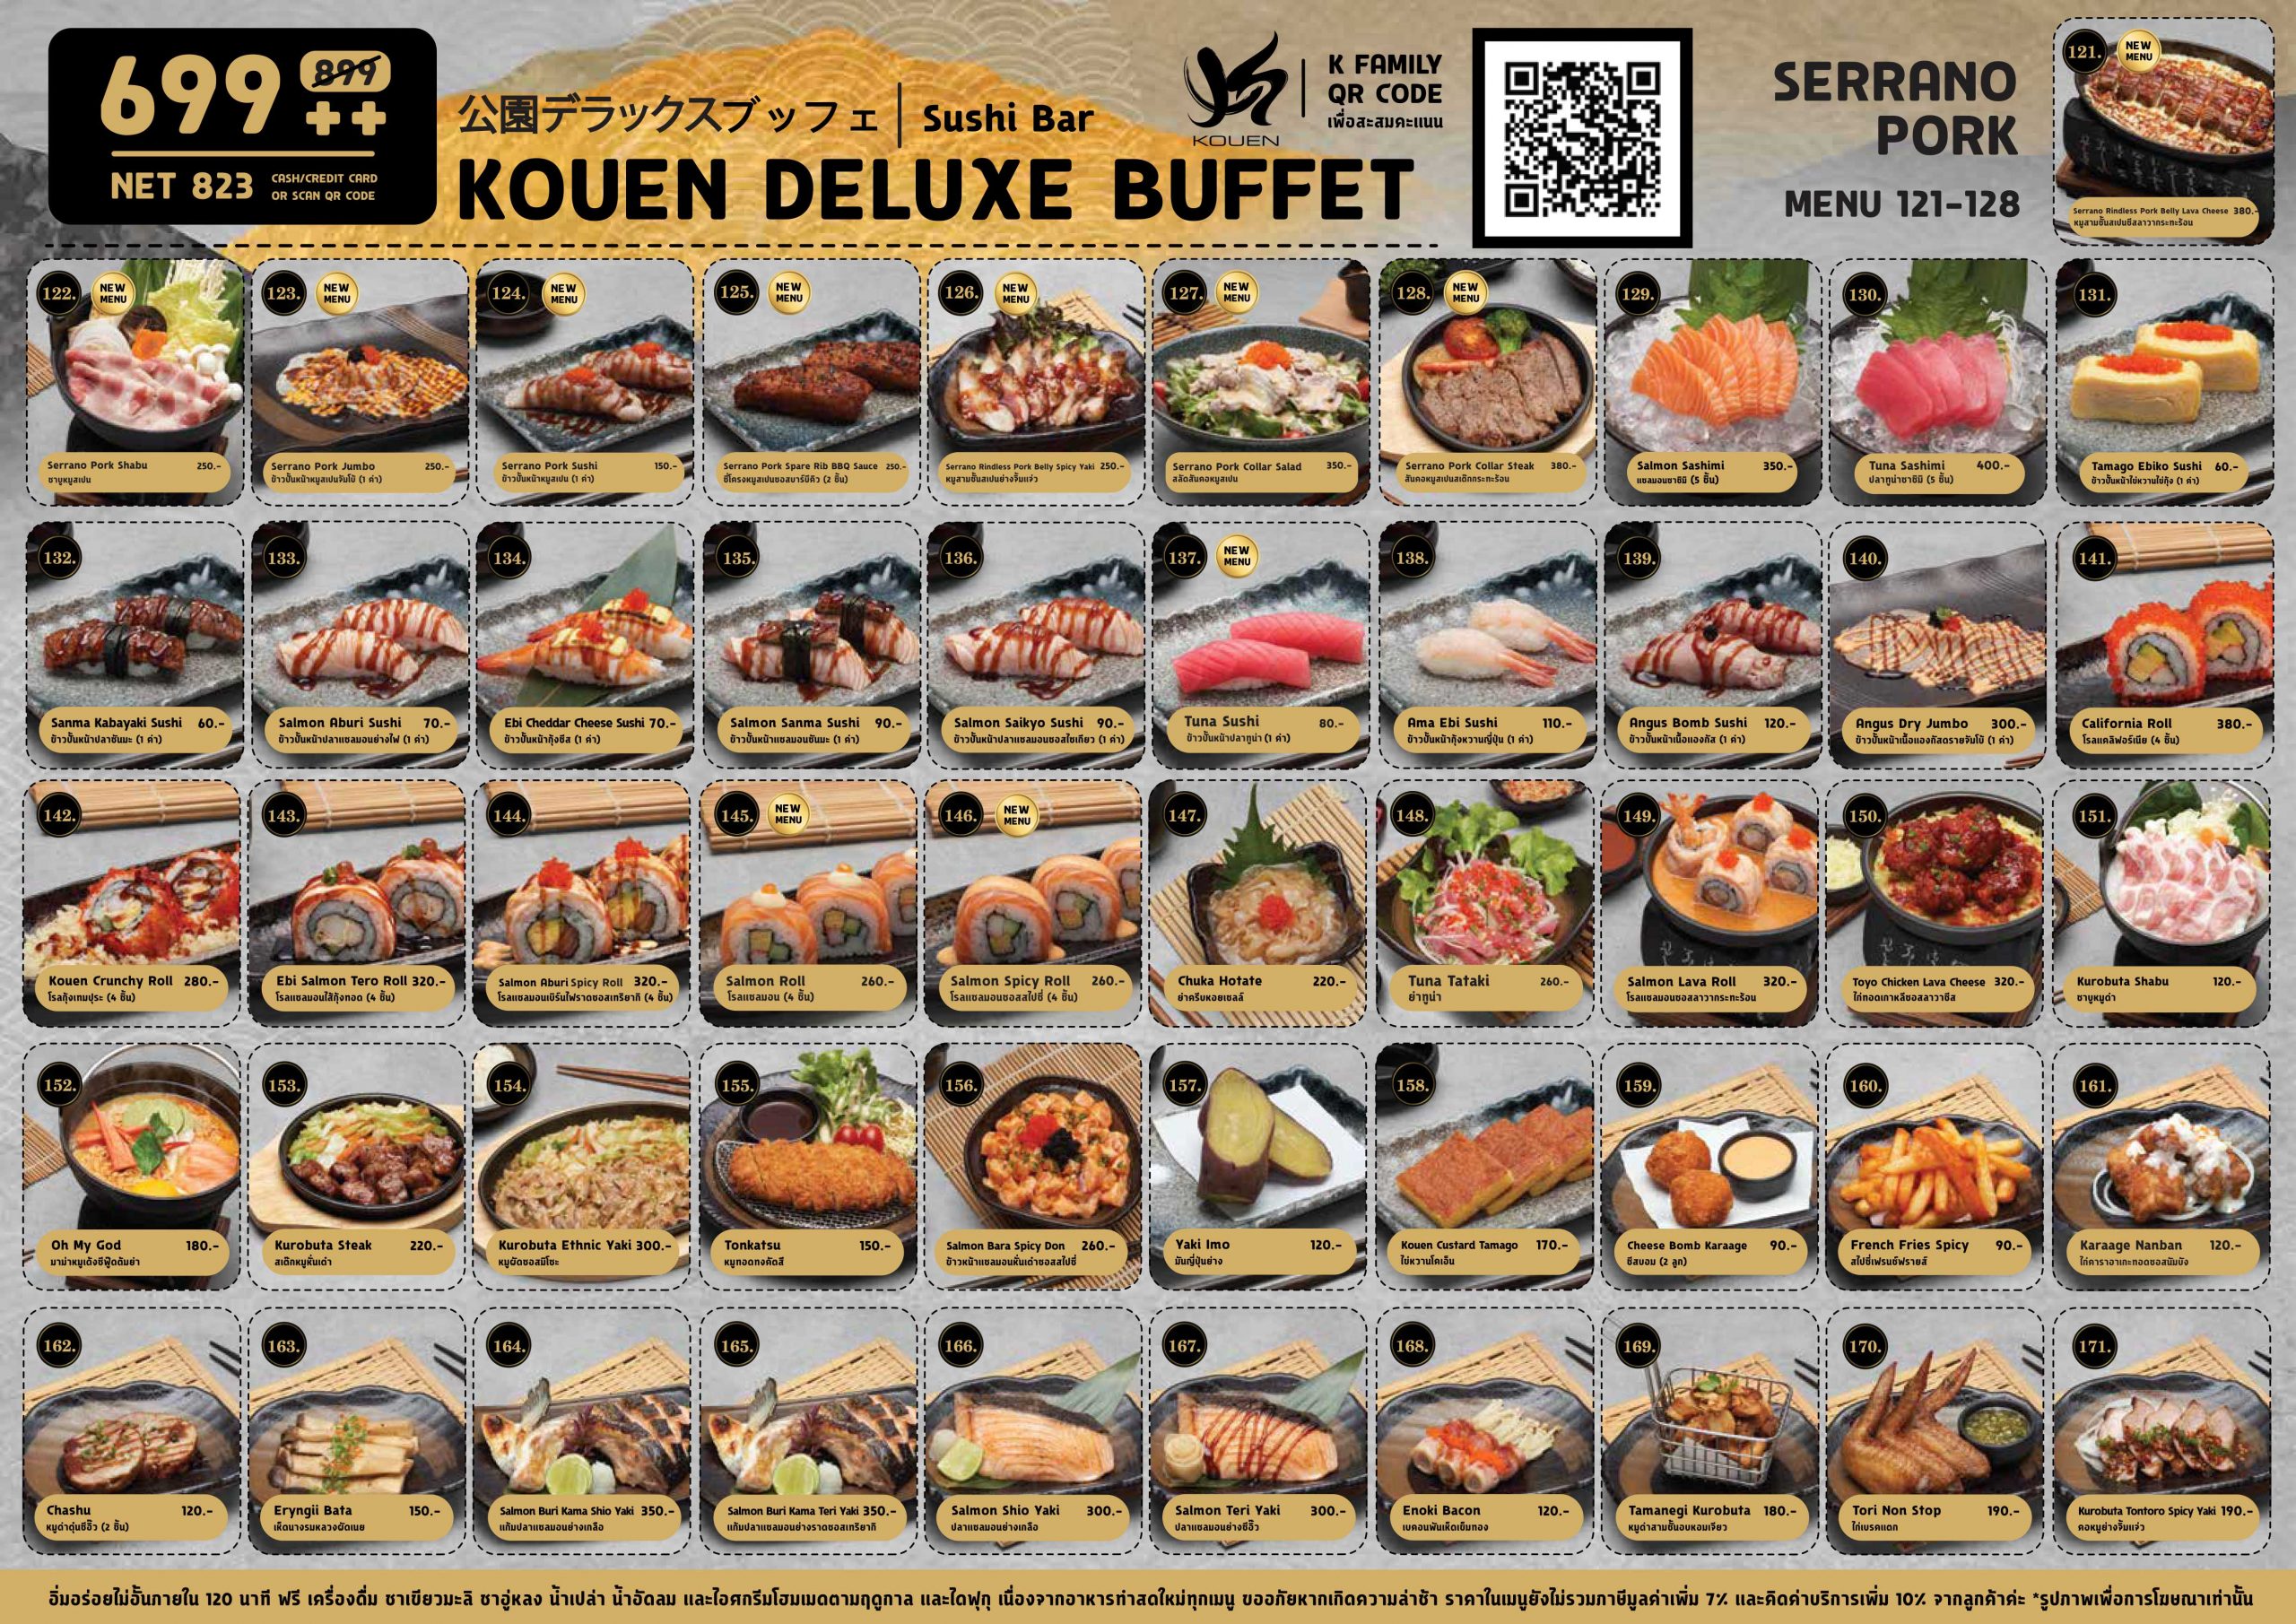 Kouen Deluxe Buffet 699++ (823 NET.-)